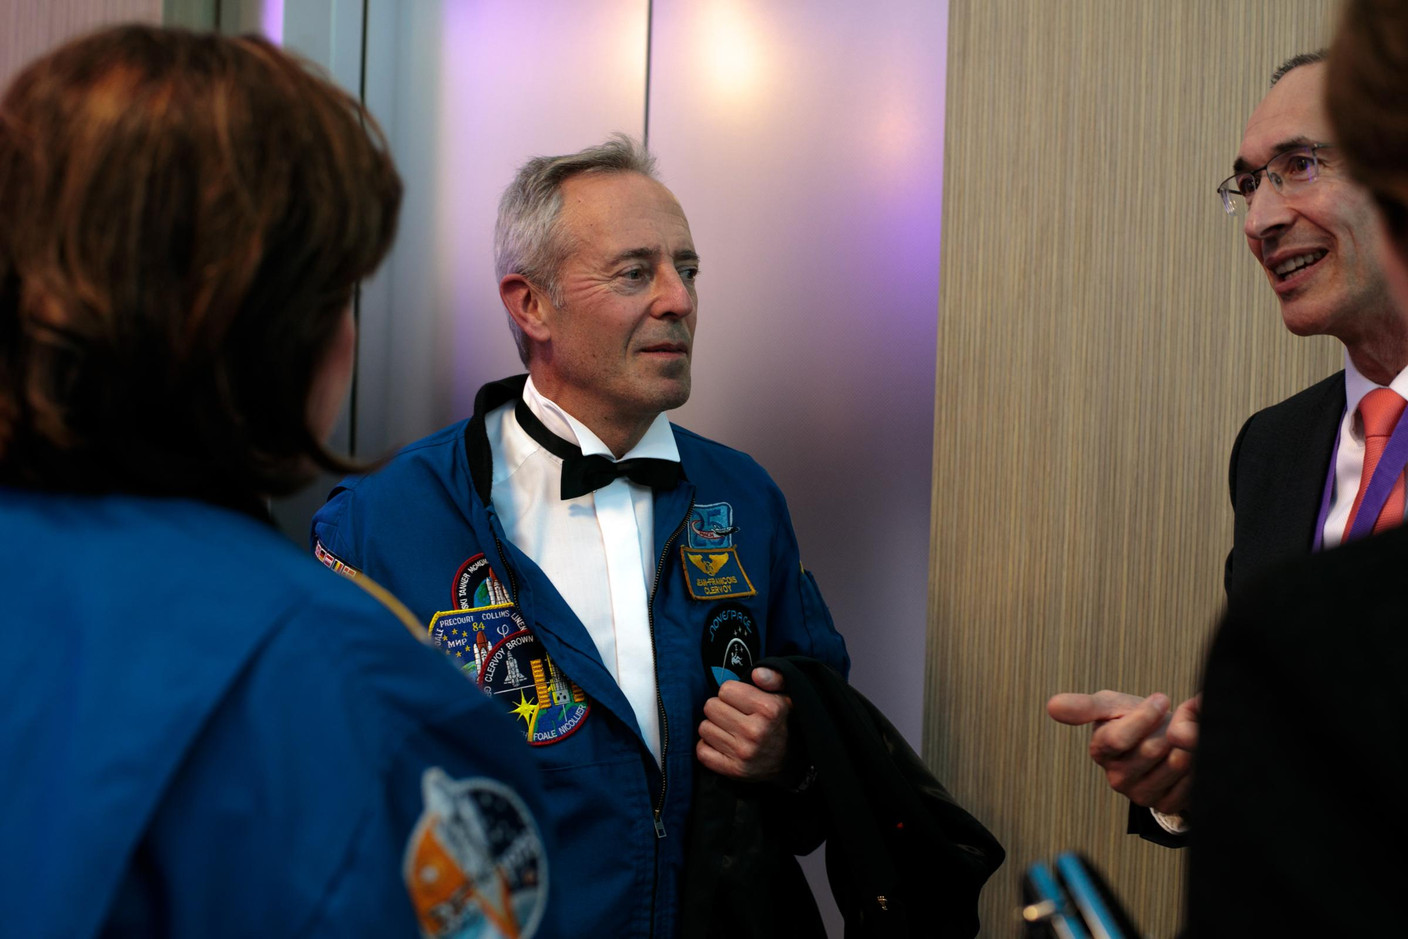 Jean-François Clervoy (Astronaute) (Photo: Matic Zorman)